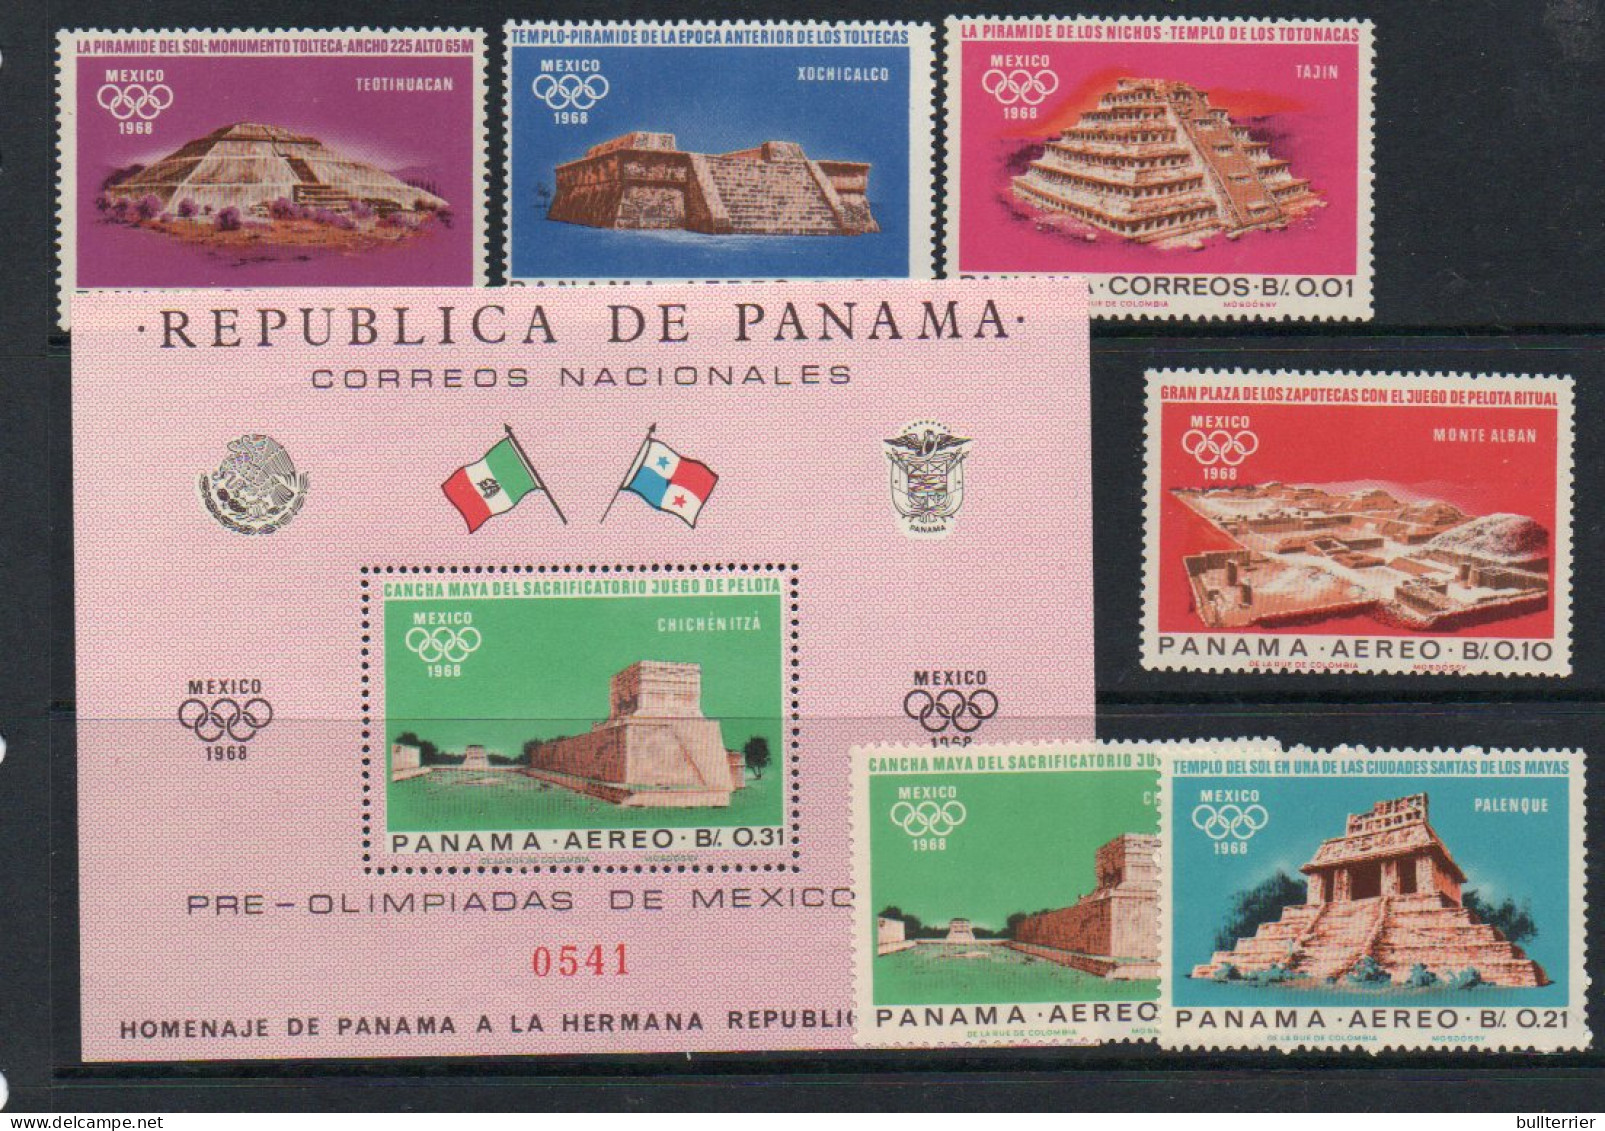 PANAMA - 1968 - PRE MEXICO OLYMPICS SET OF 8 + SOUVENIR SHEET MINT NEVER HINGED  - Panamá